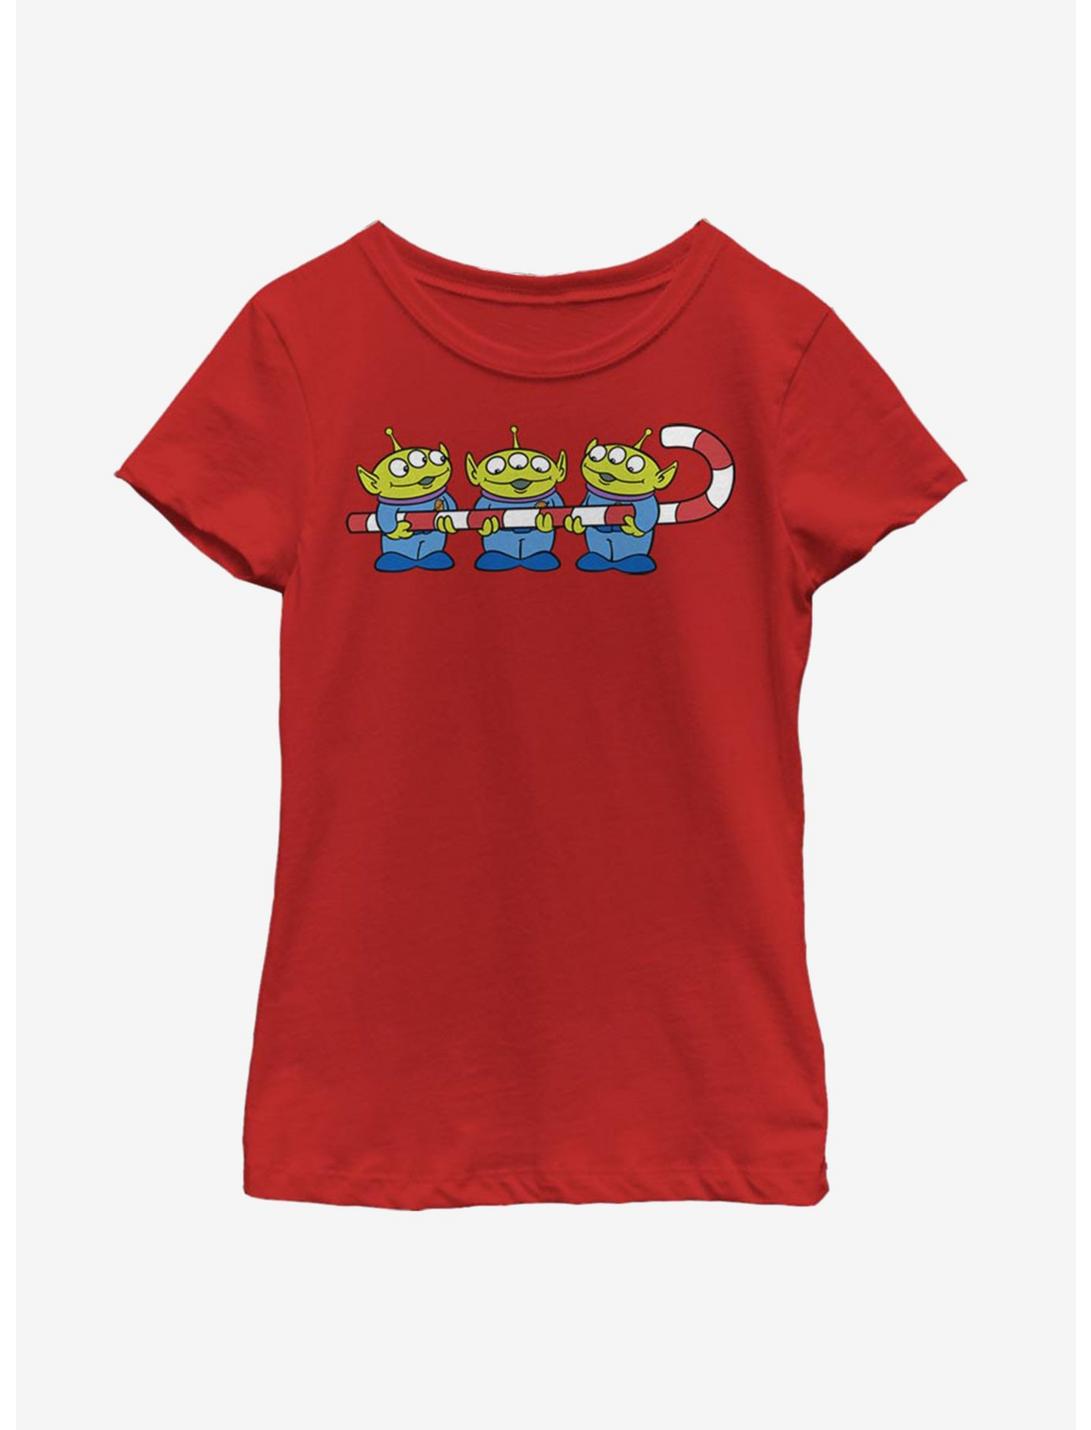 Disney Pixar Toy Story Cane Do Attitude Youth Girls T-Shirt, RED, hi-res